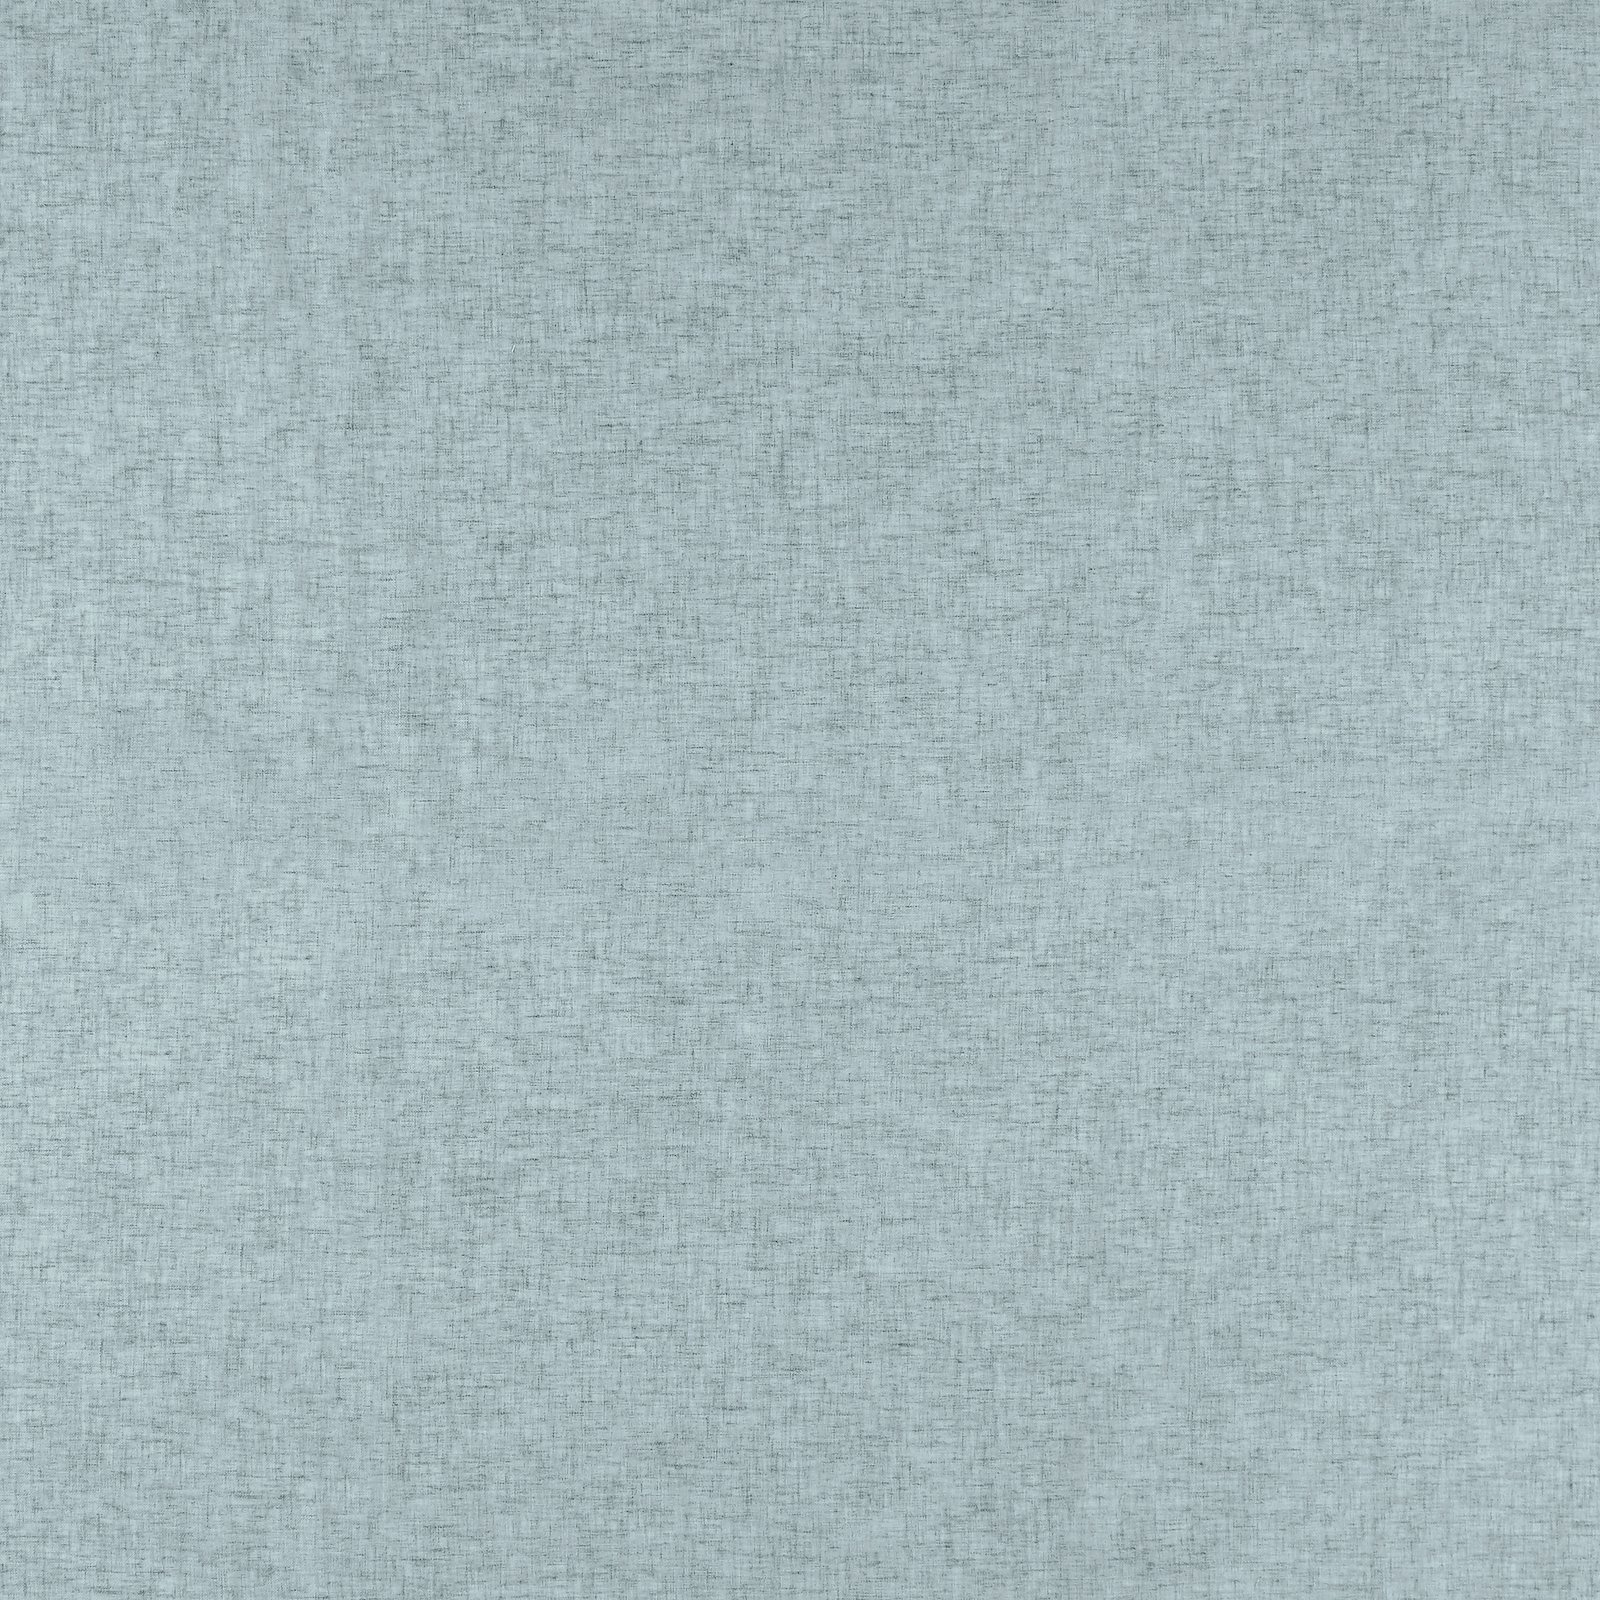 Voile blågrå polyester/lin mix 835186_pack_solid